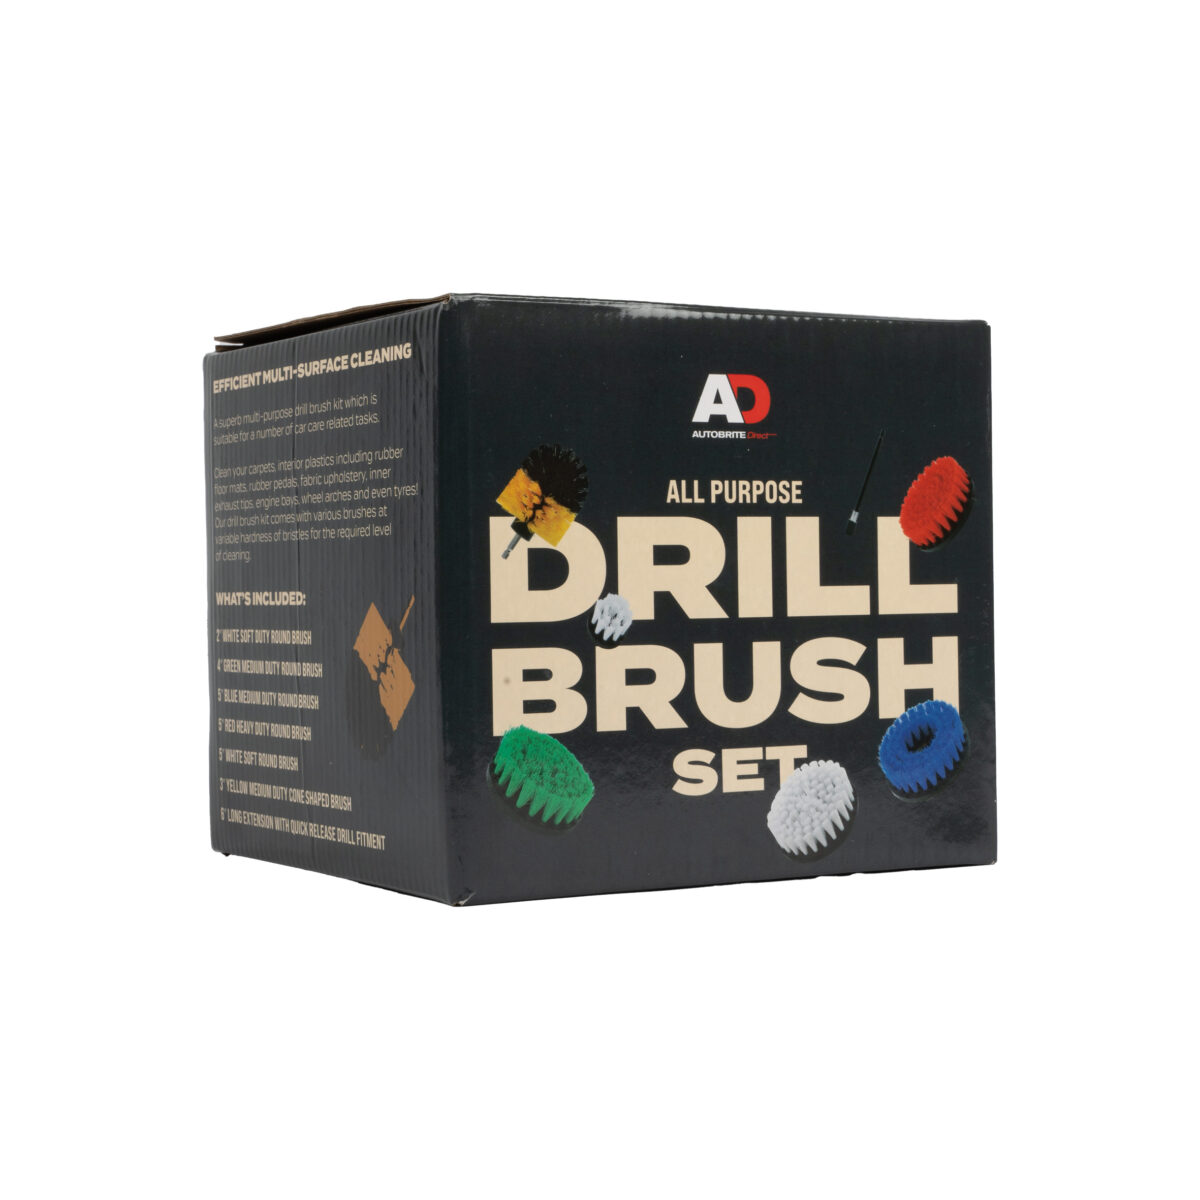 Drill Brush Set Box